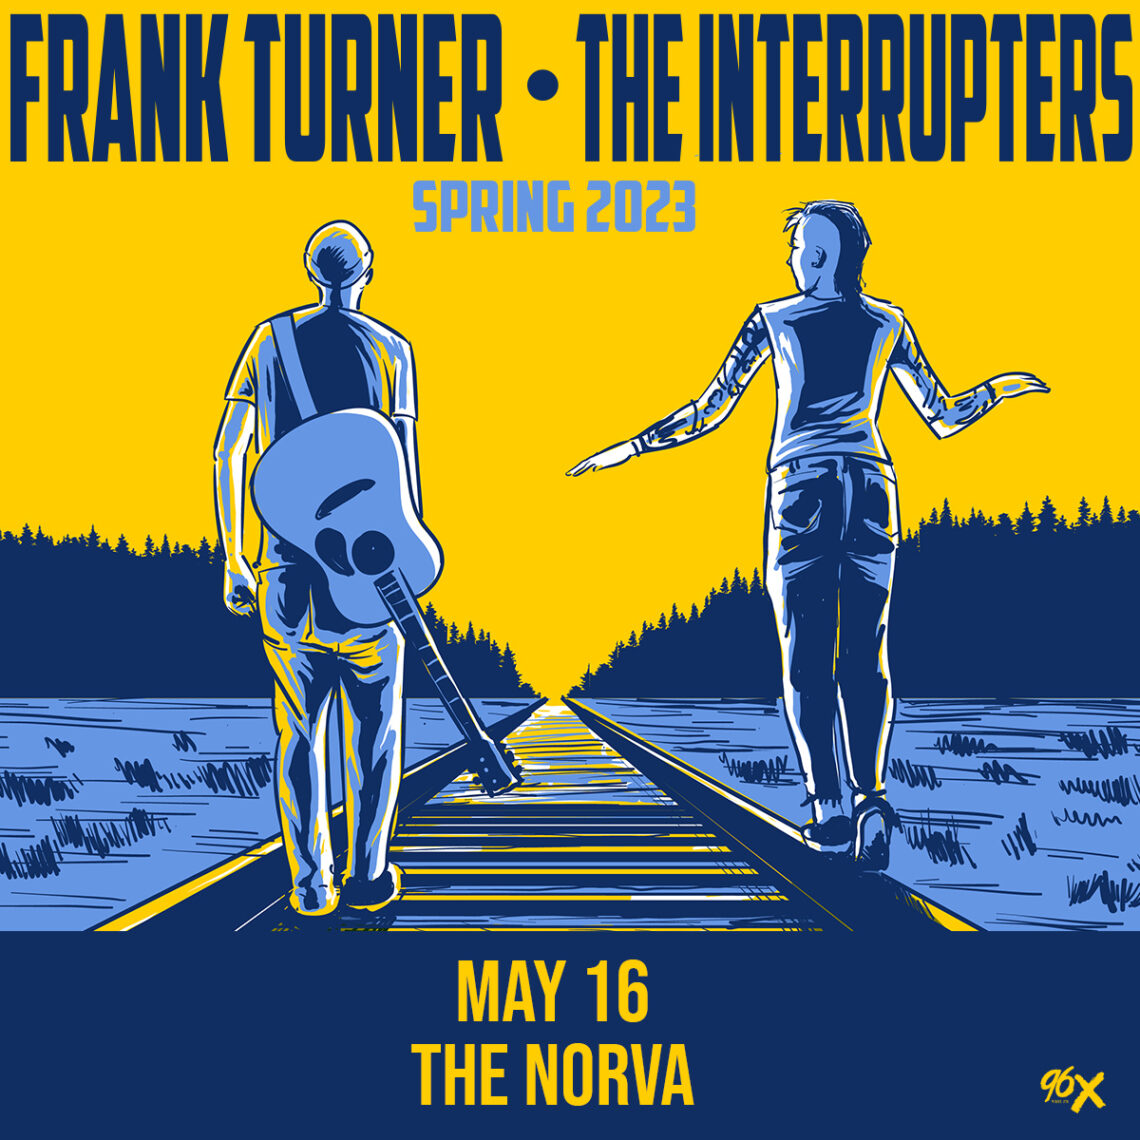 96X Presents Frank Turner + The Interrupters